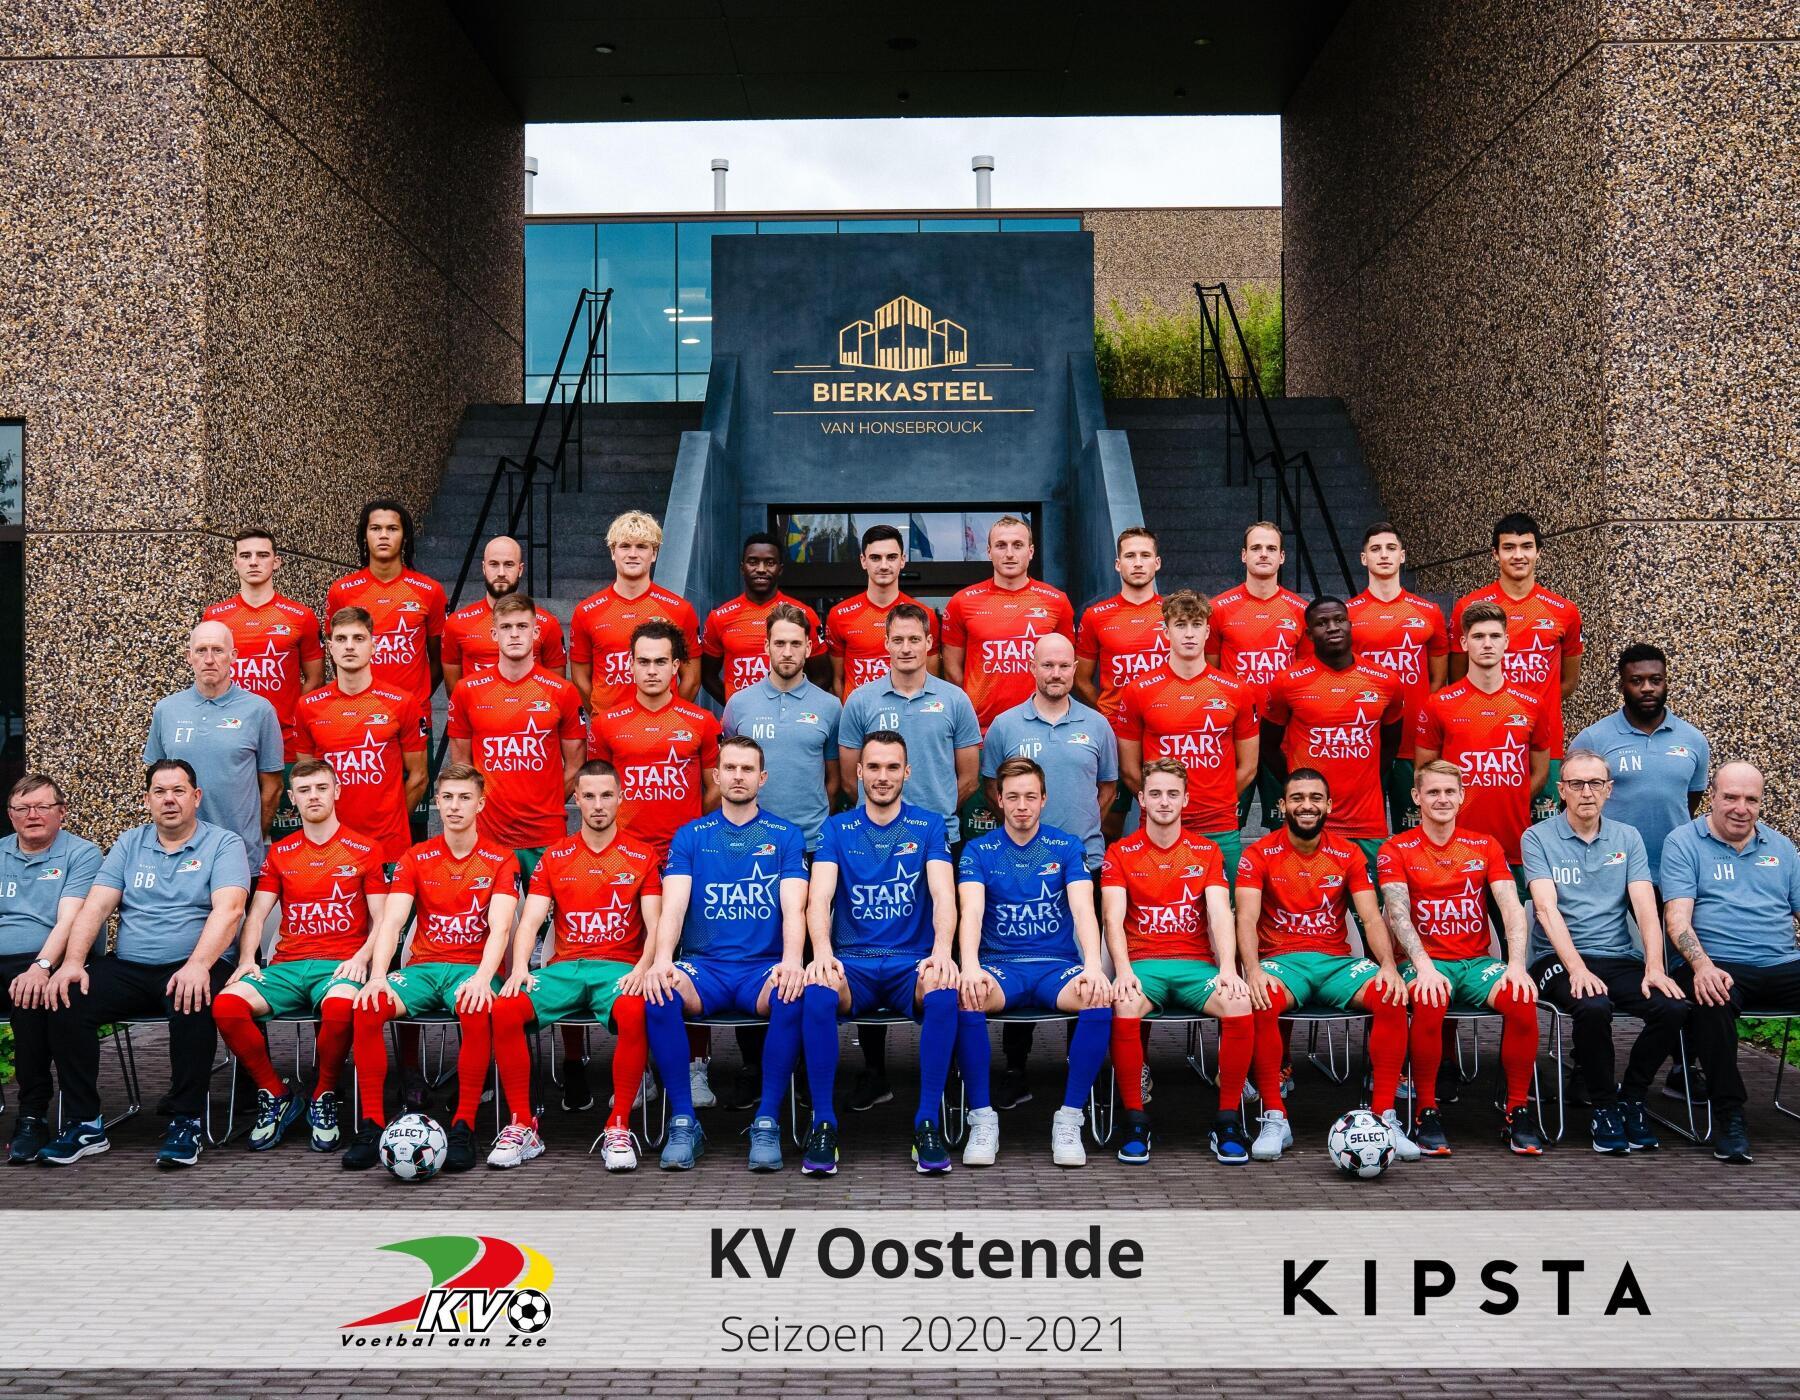 KIPSTA, a partner with KV Oostende